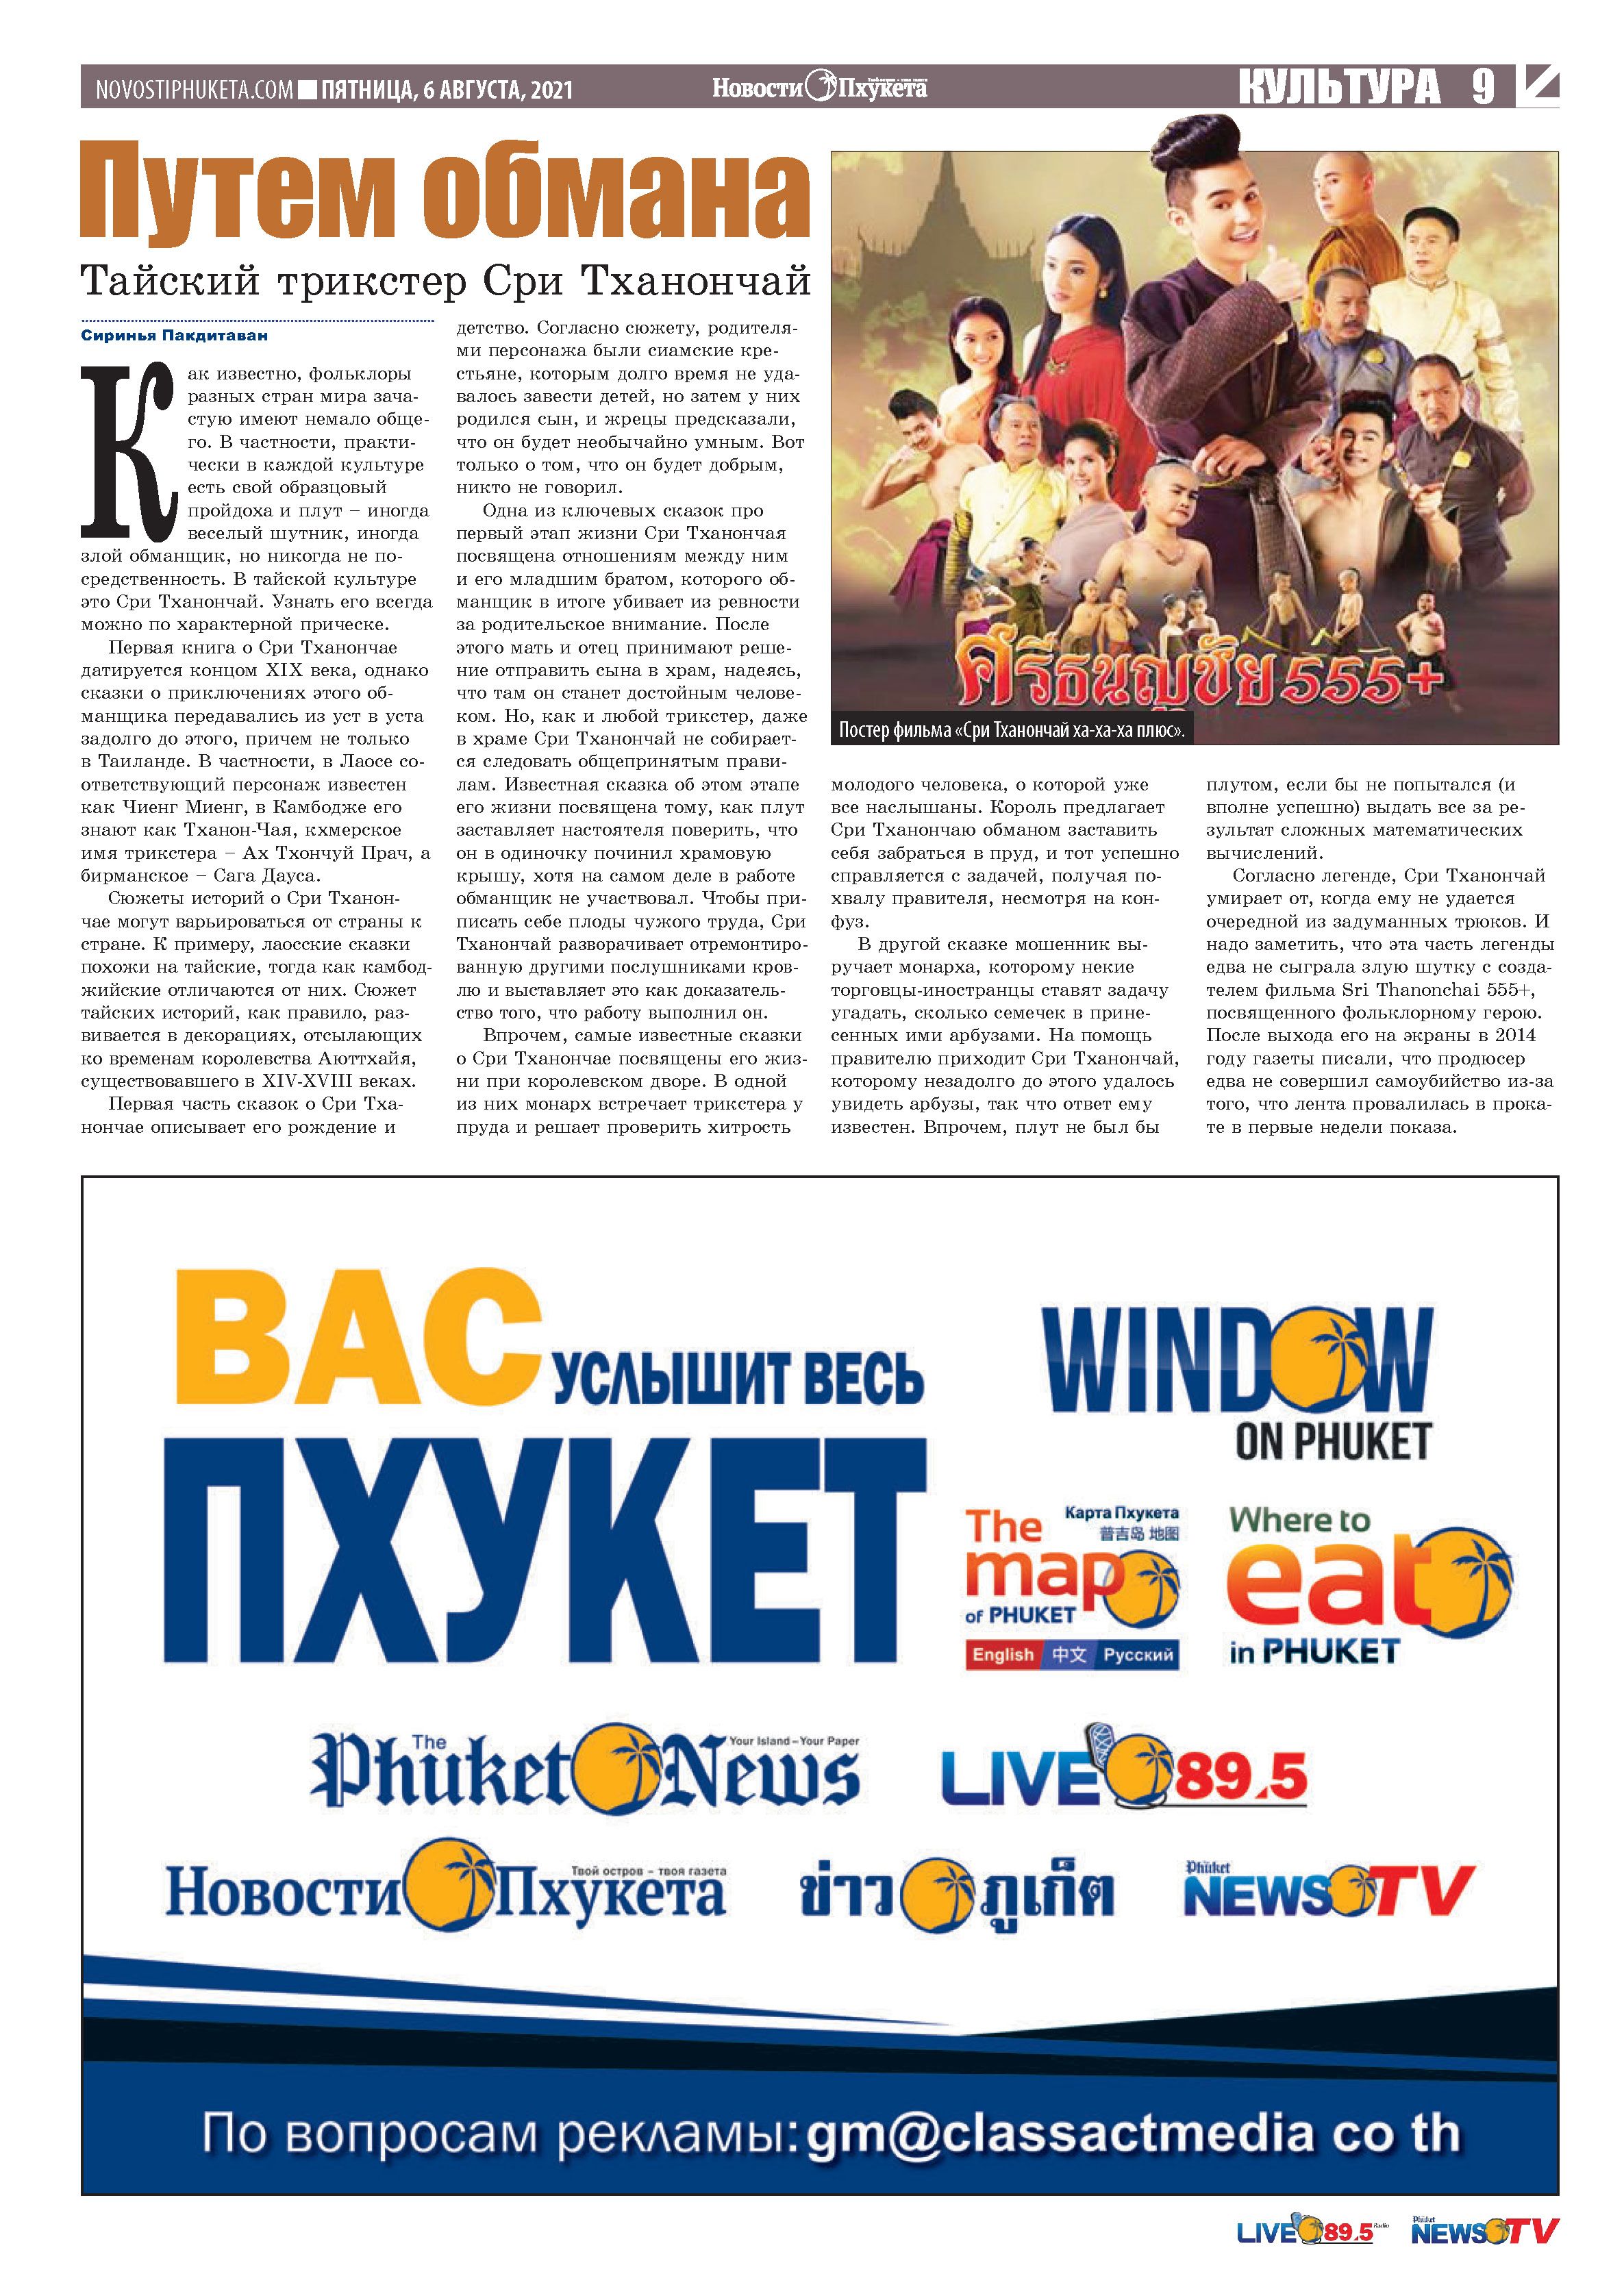 Phuket Newspaper - https://www.novostiphuketa.com/archive/06-08-2021/06-08-2021_Page_09.jpg